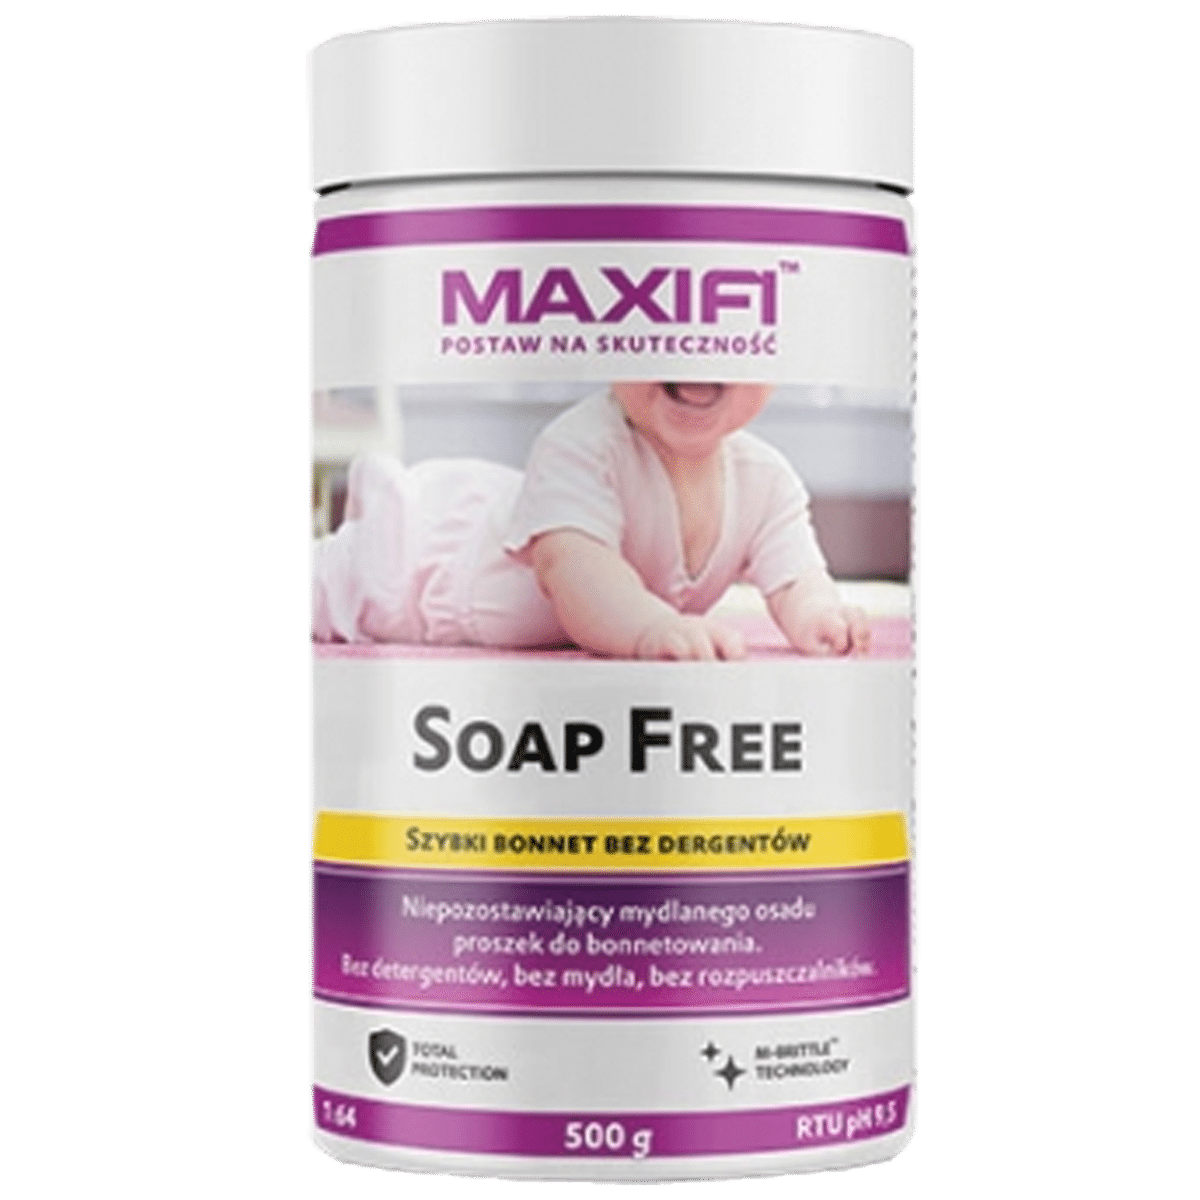 MAXIFI Soap Free 500g Proszek bez Detergentów do Bonnetowania